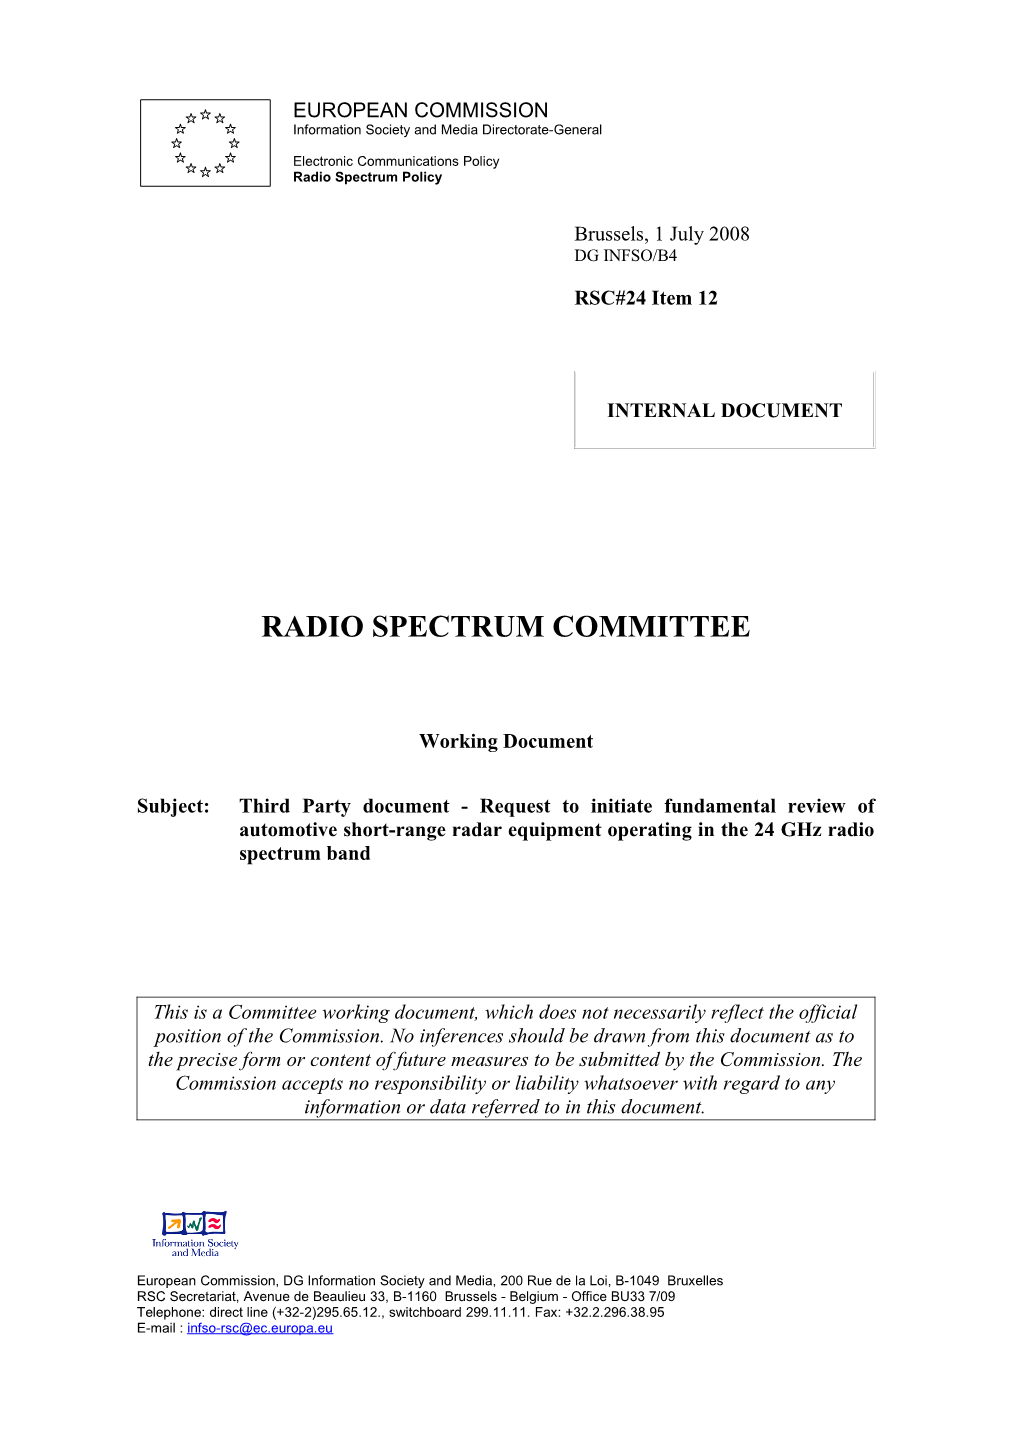 Radio Spectrum Committee